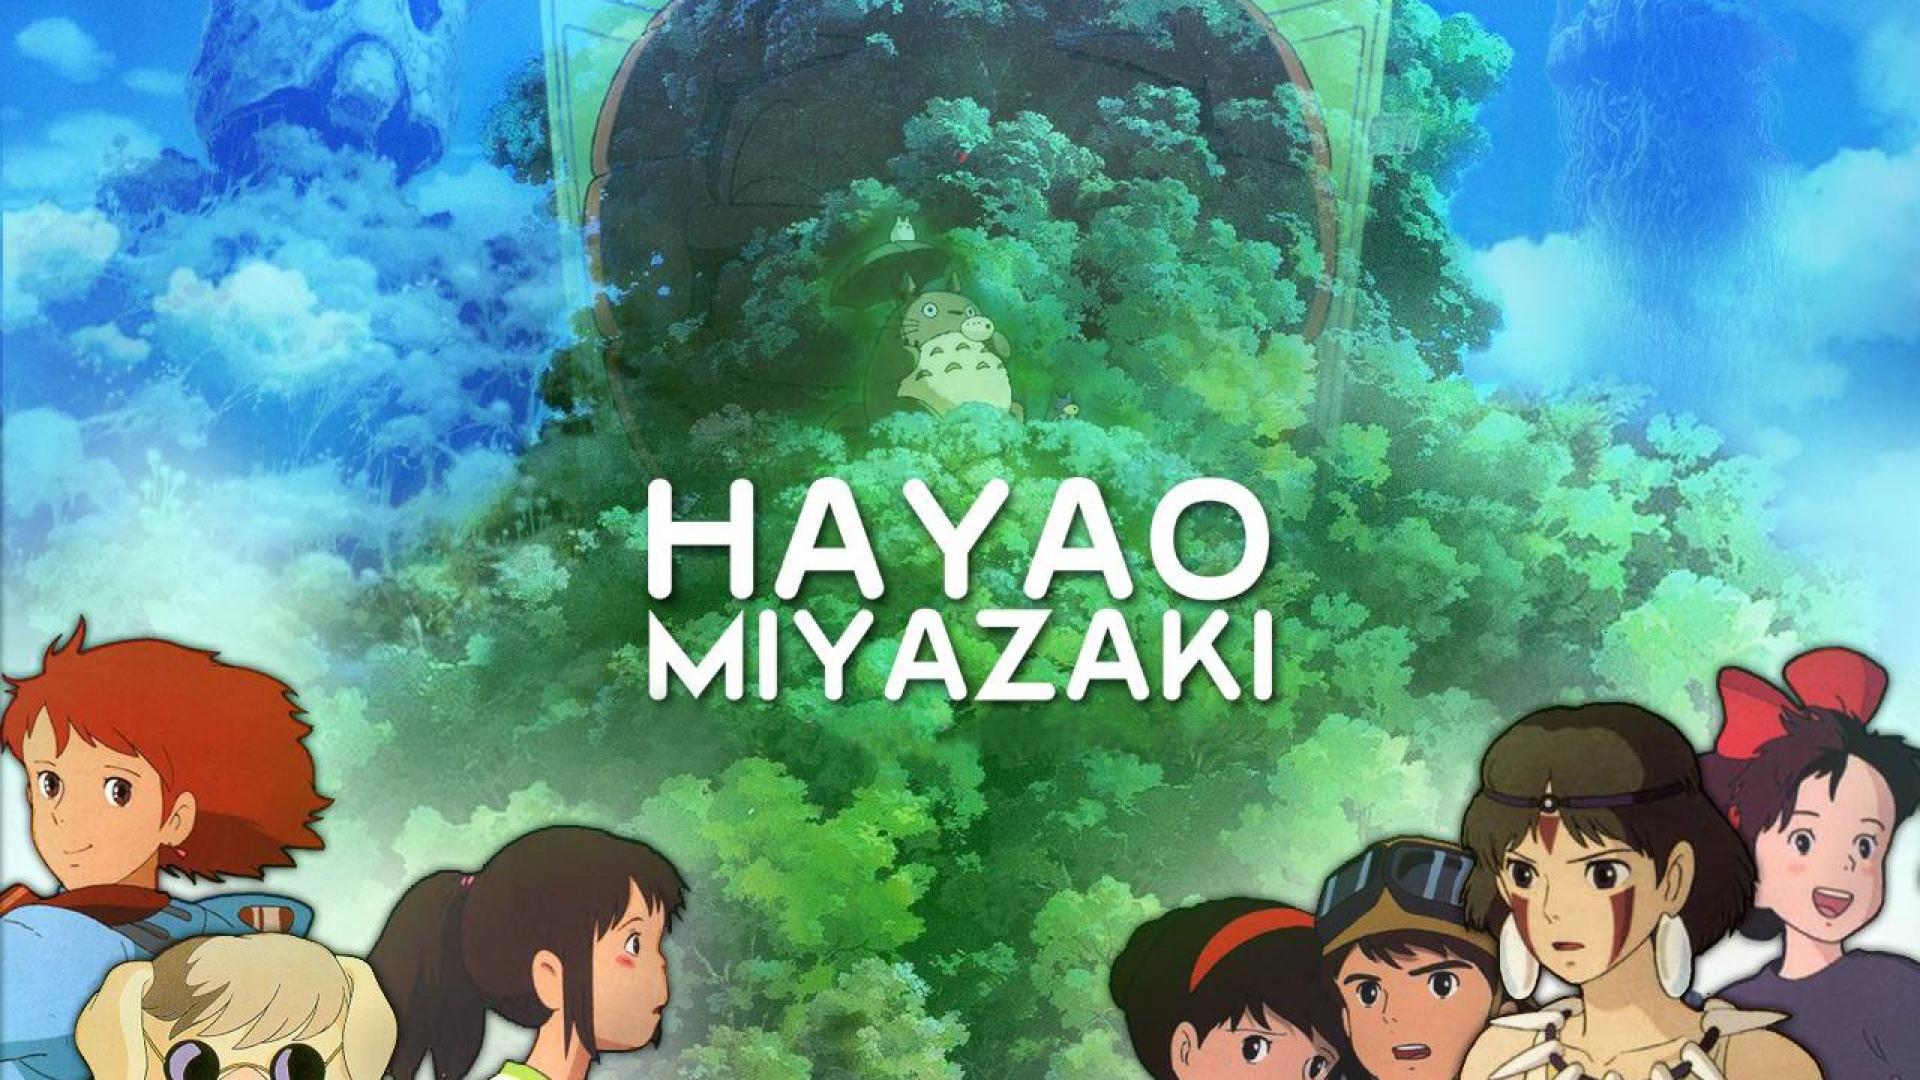 Hayao miyazaki hd wallpaper - HQ Desktop Wallpapers